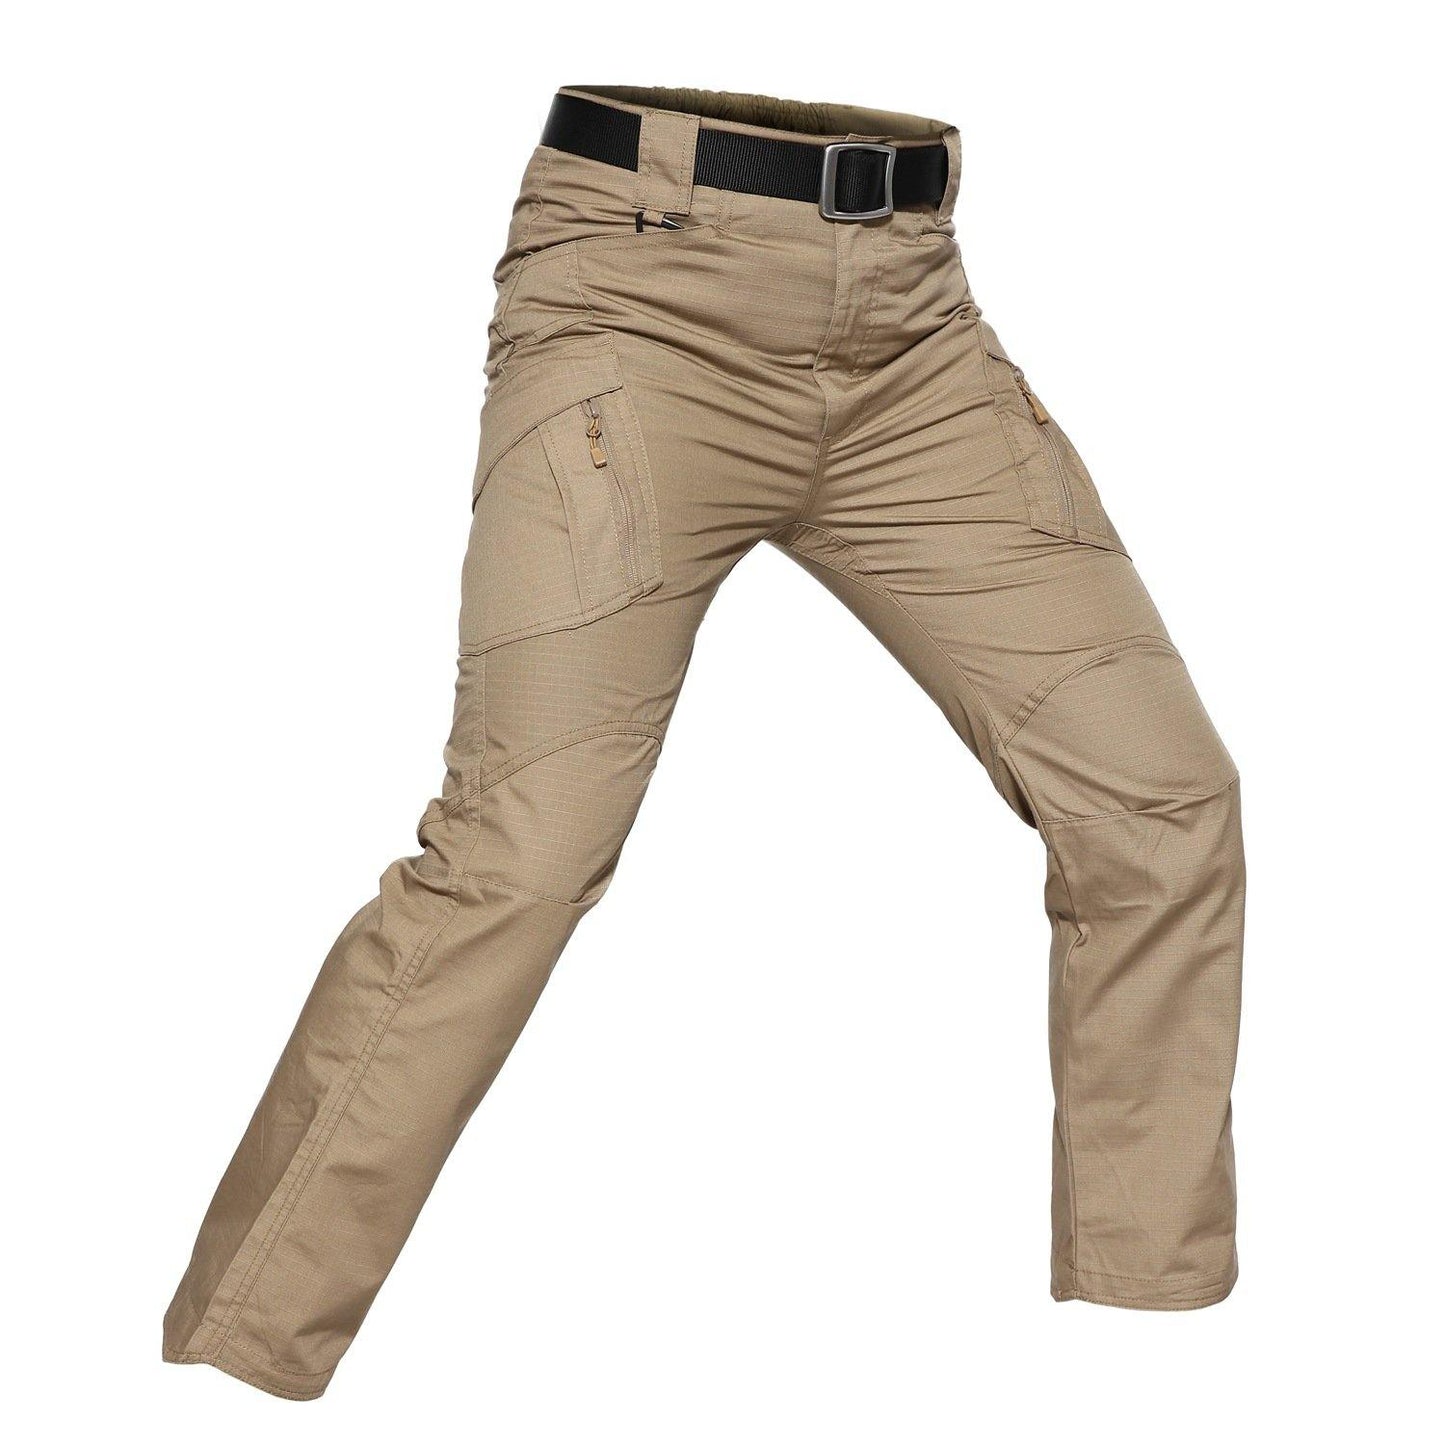 Pantalones tácticos para hombre IX9 outdoor - MXbueno